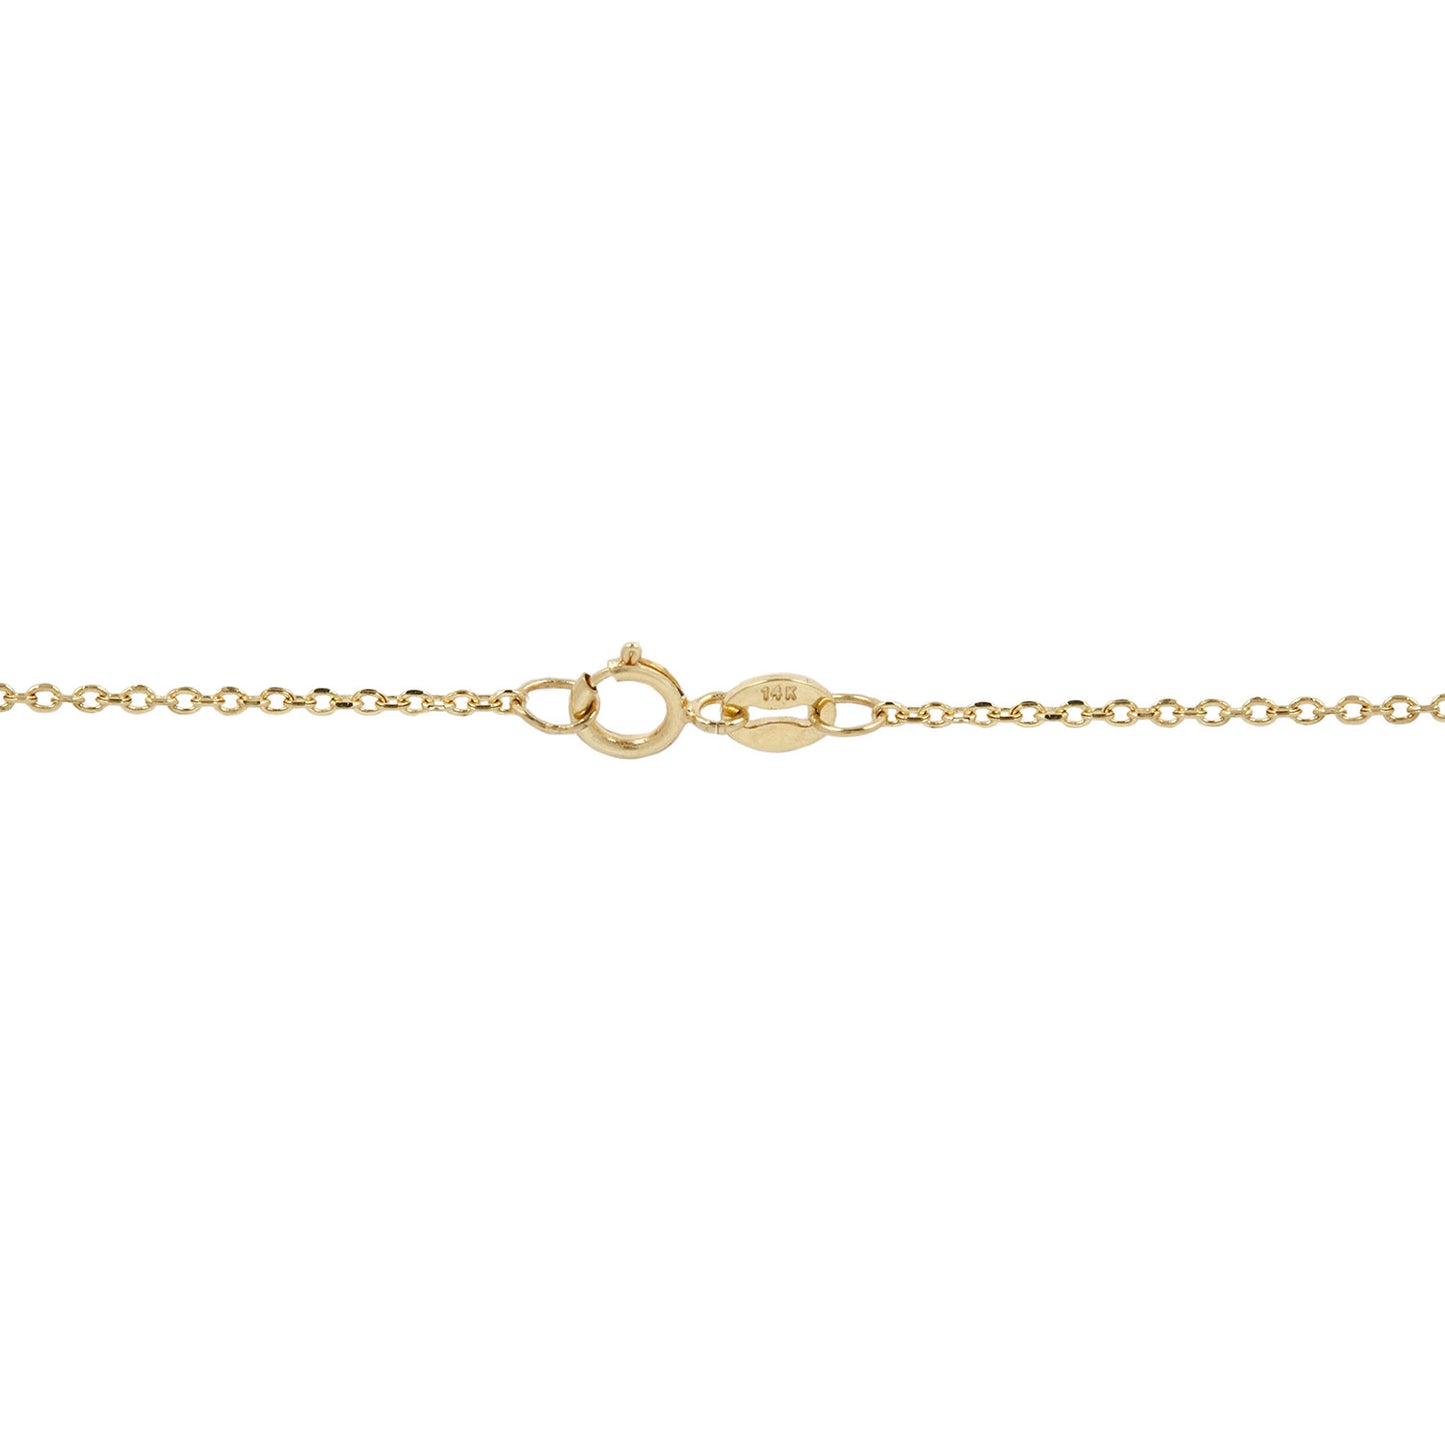 II Gold Shard Pendant Necklace